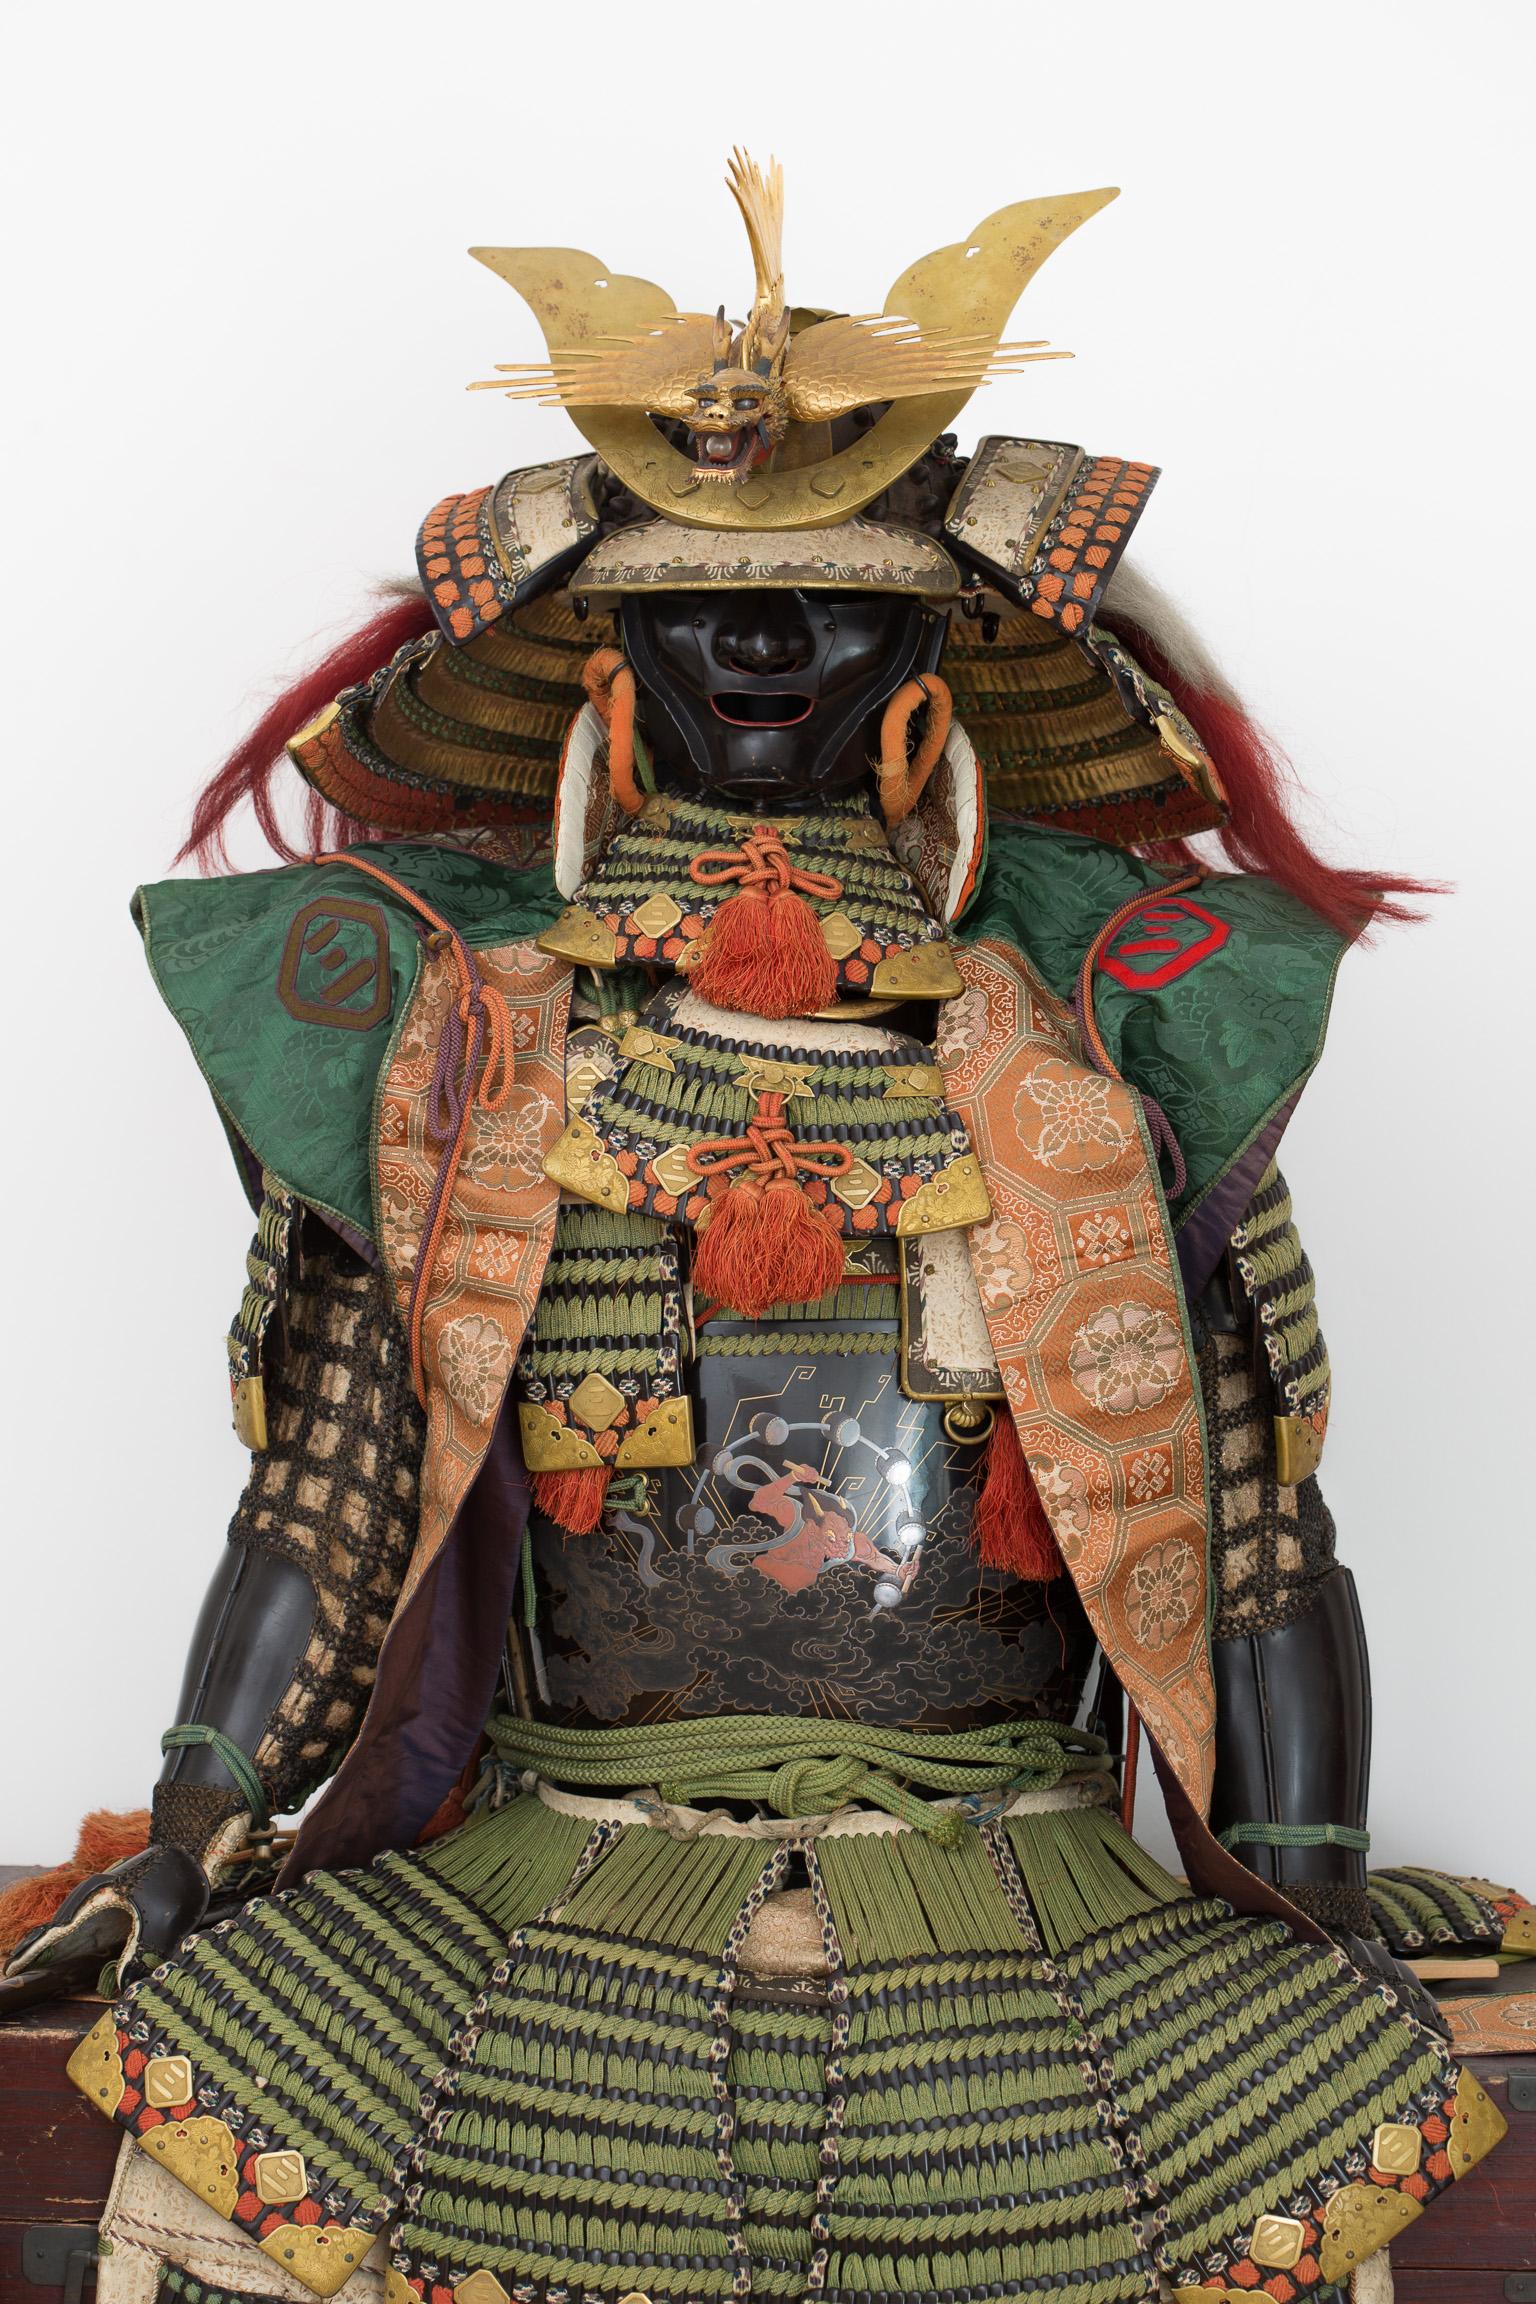 Maki-e hotoke-do tosei gusoku
Samurai armor bearing the kamon of Inaba family

Mid to late Edo period (1615 - 1867)
Kabuto bachi signed “Masuda Myochin Minbu Ki no Munesada Saku” and dated February 1757

Provenance:
Iyo no kami Inaba clan

 

This